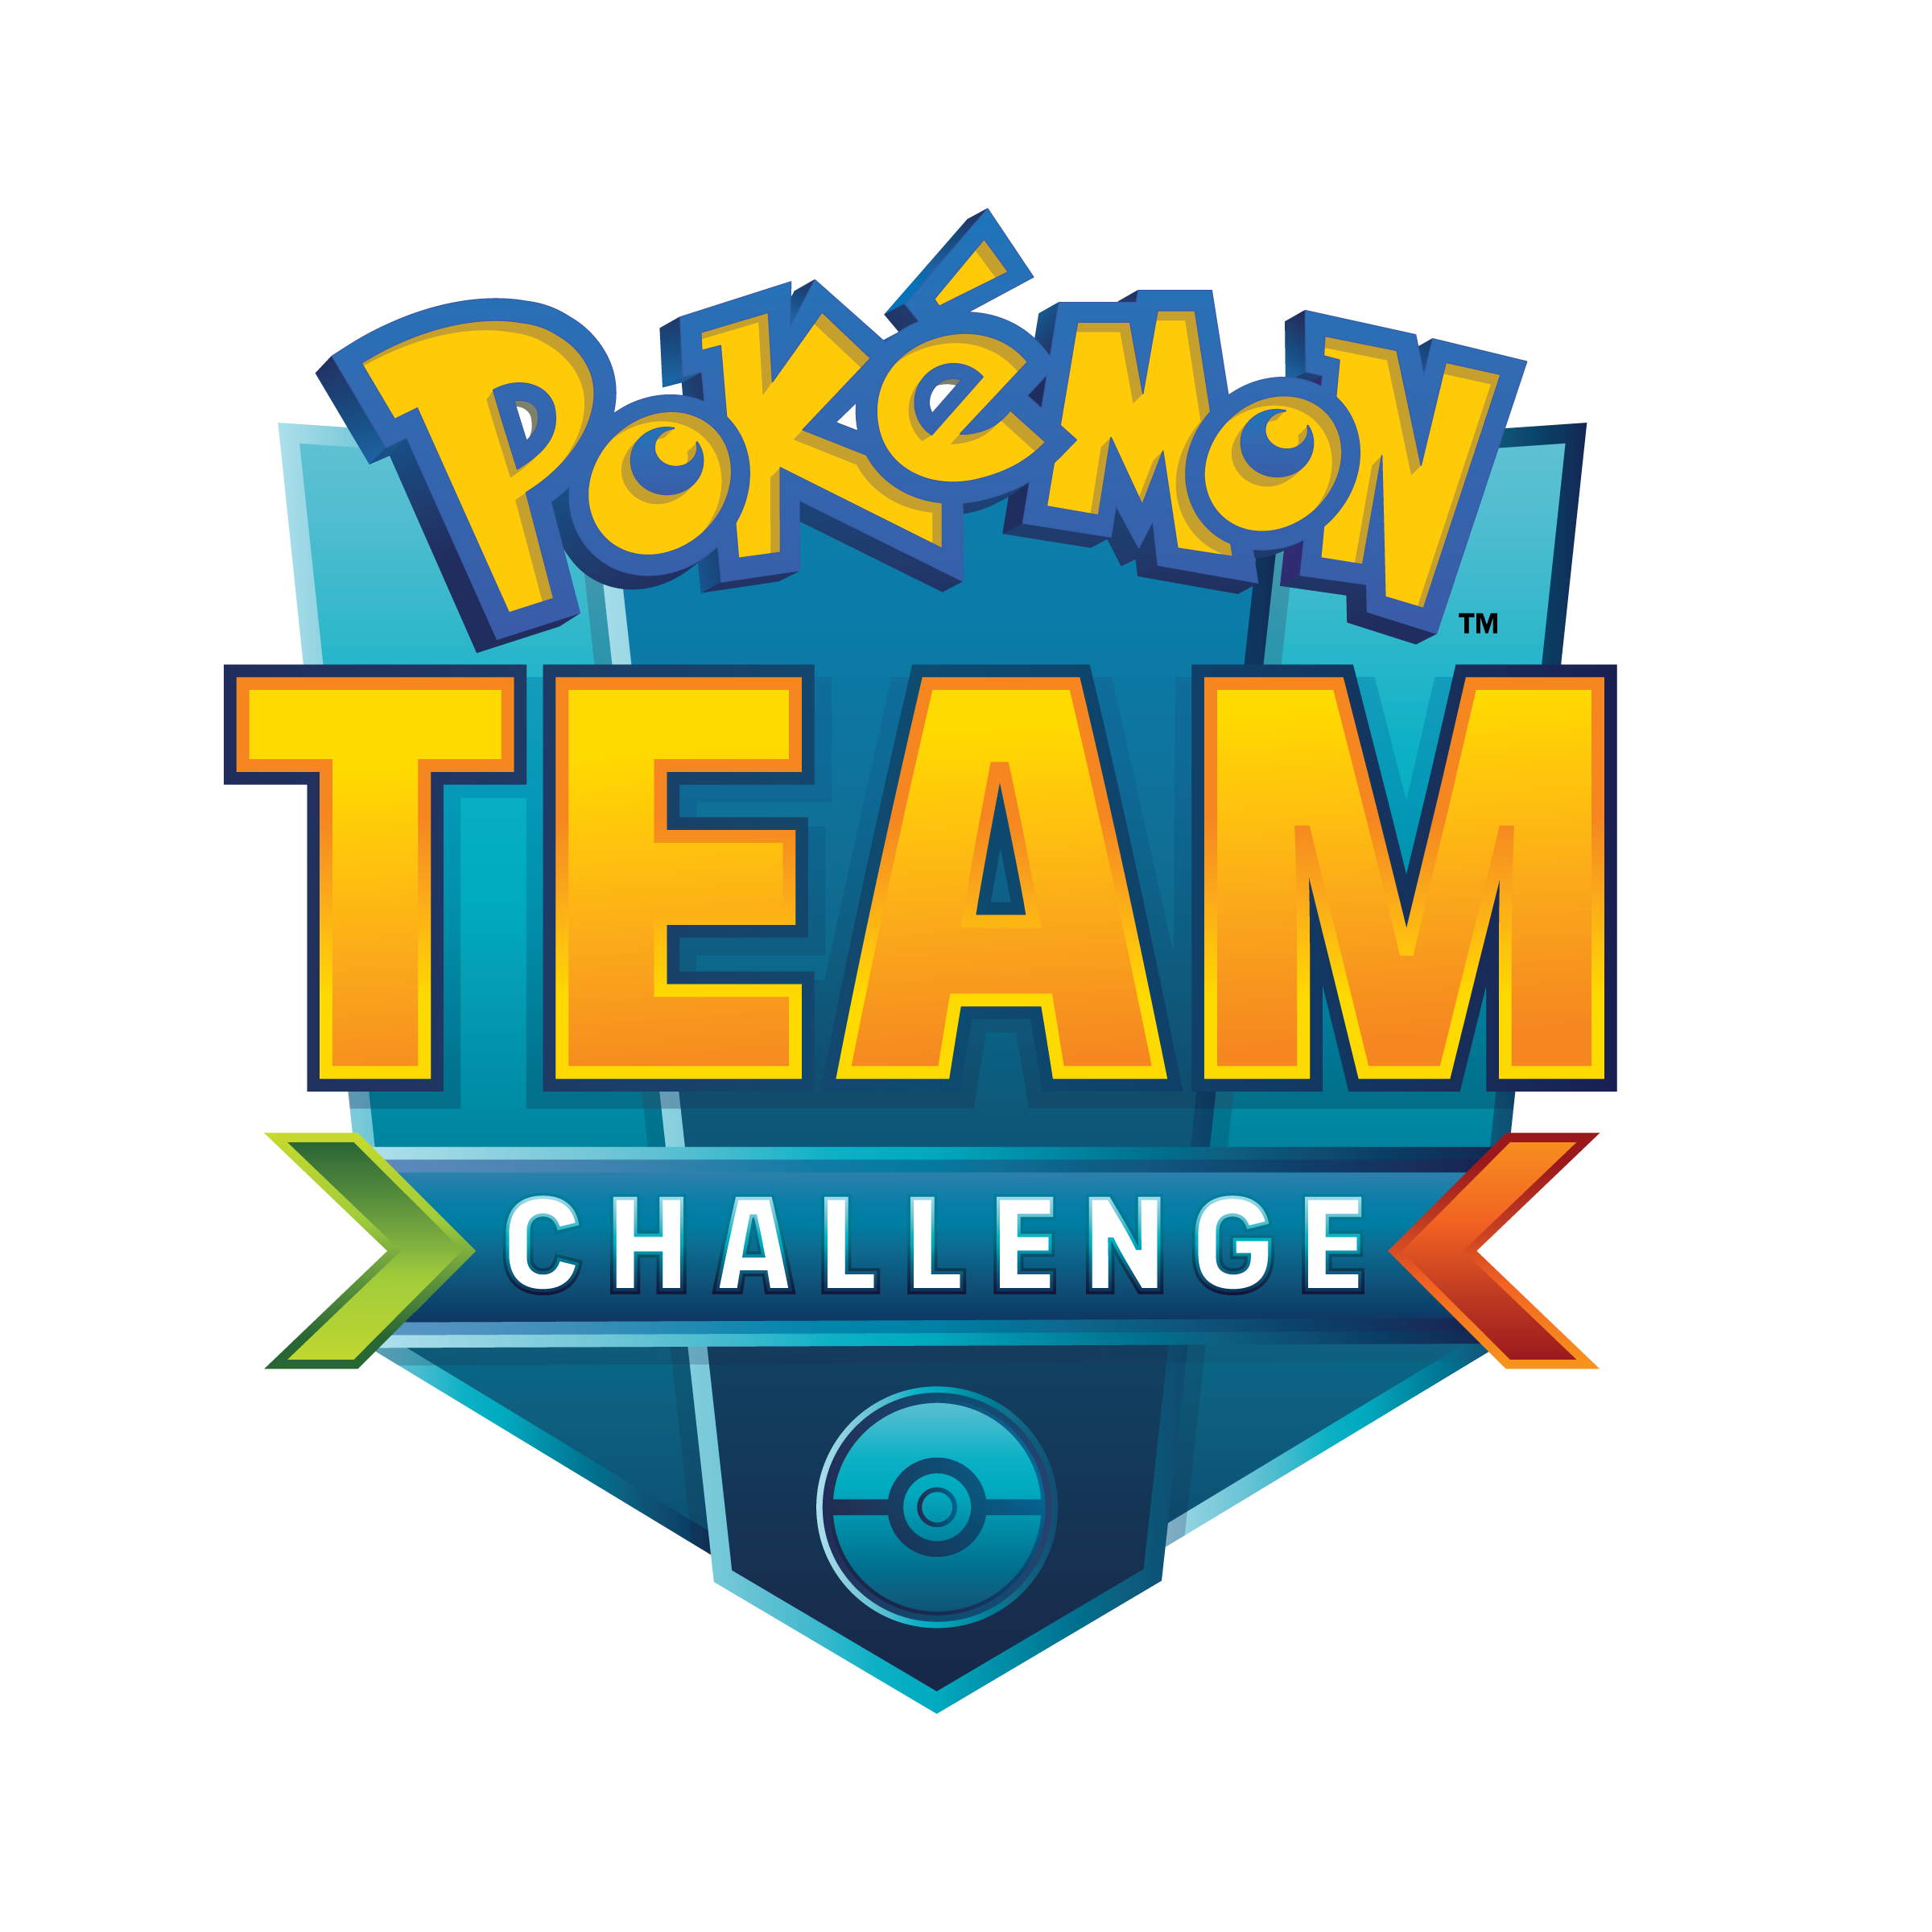 Team Challenge Season 4